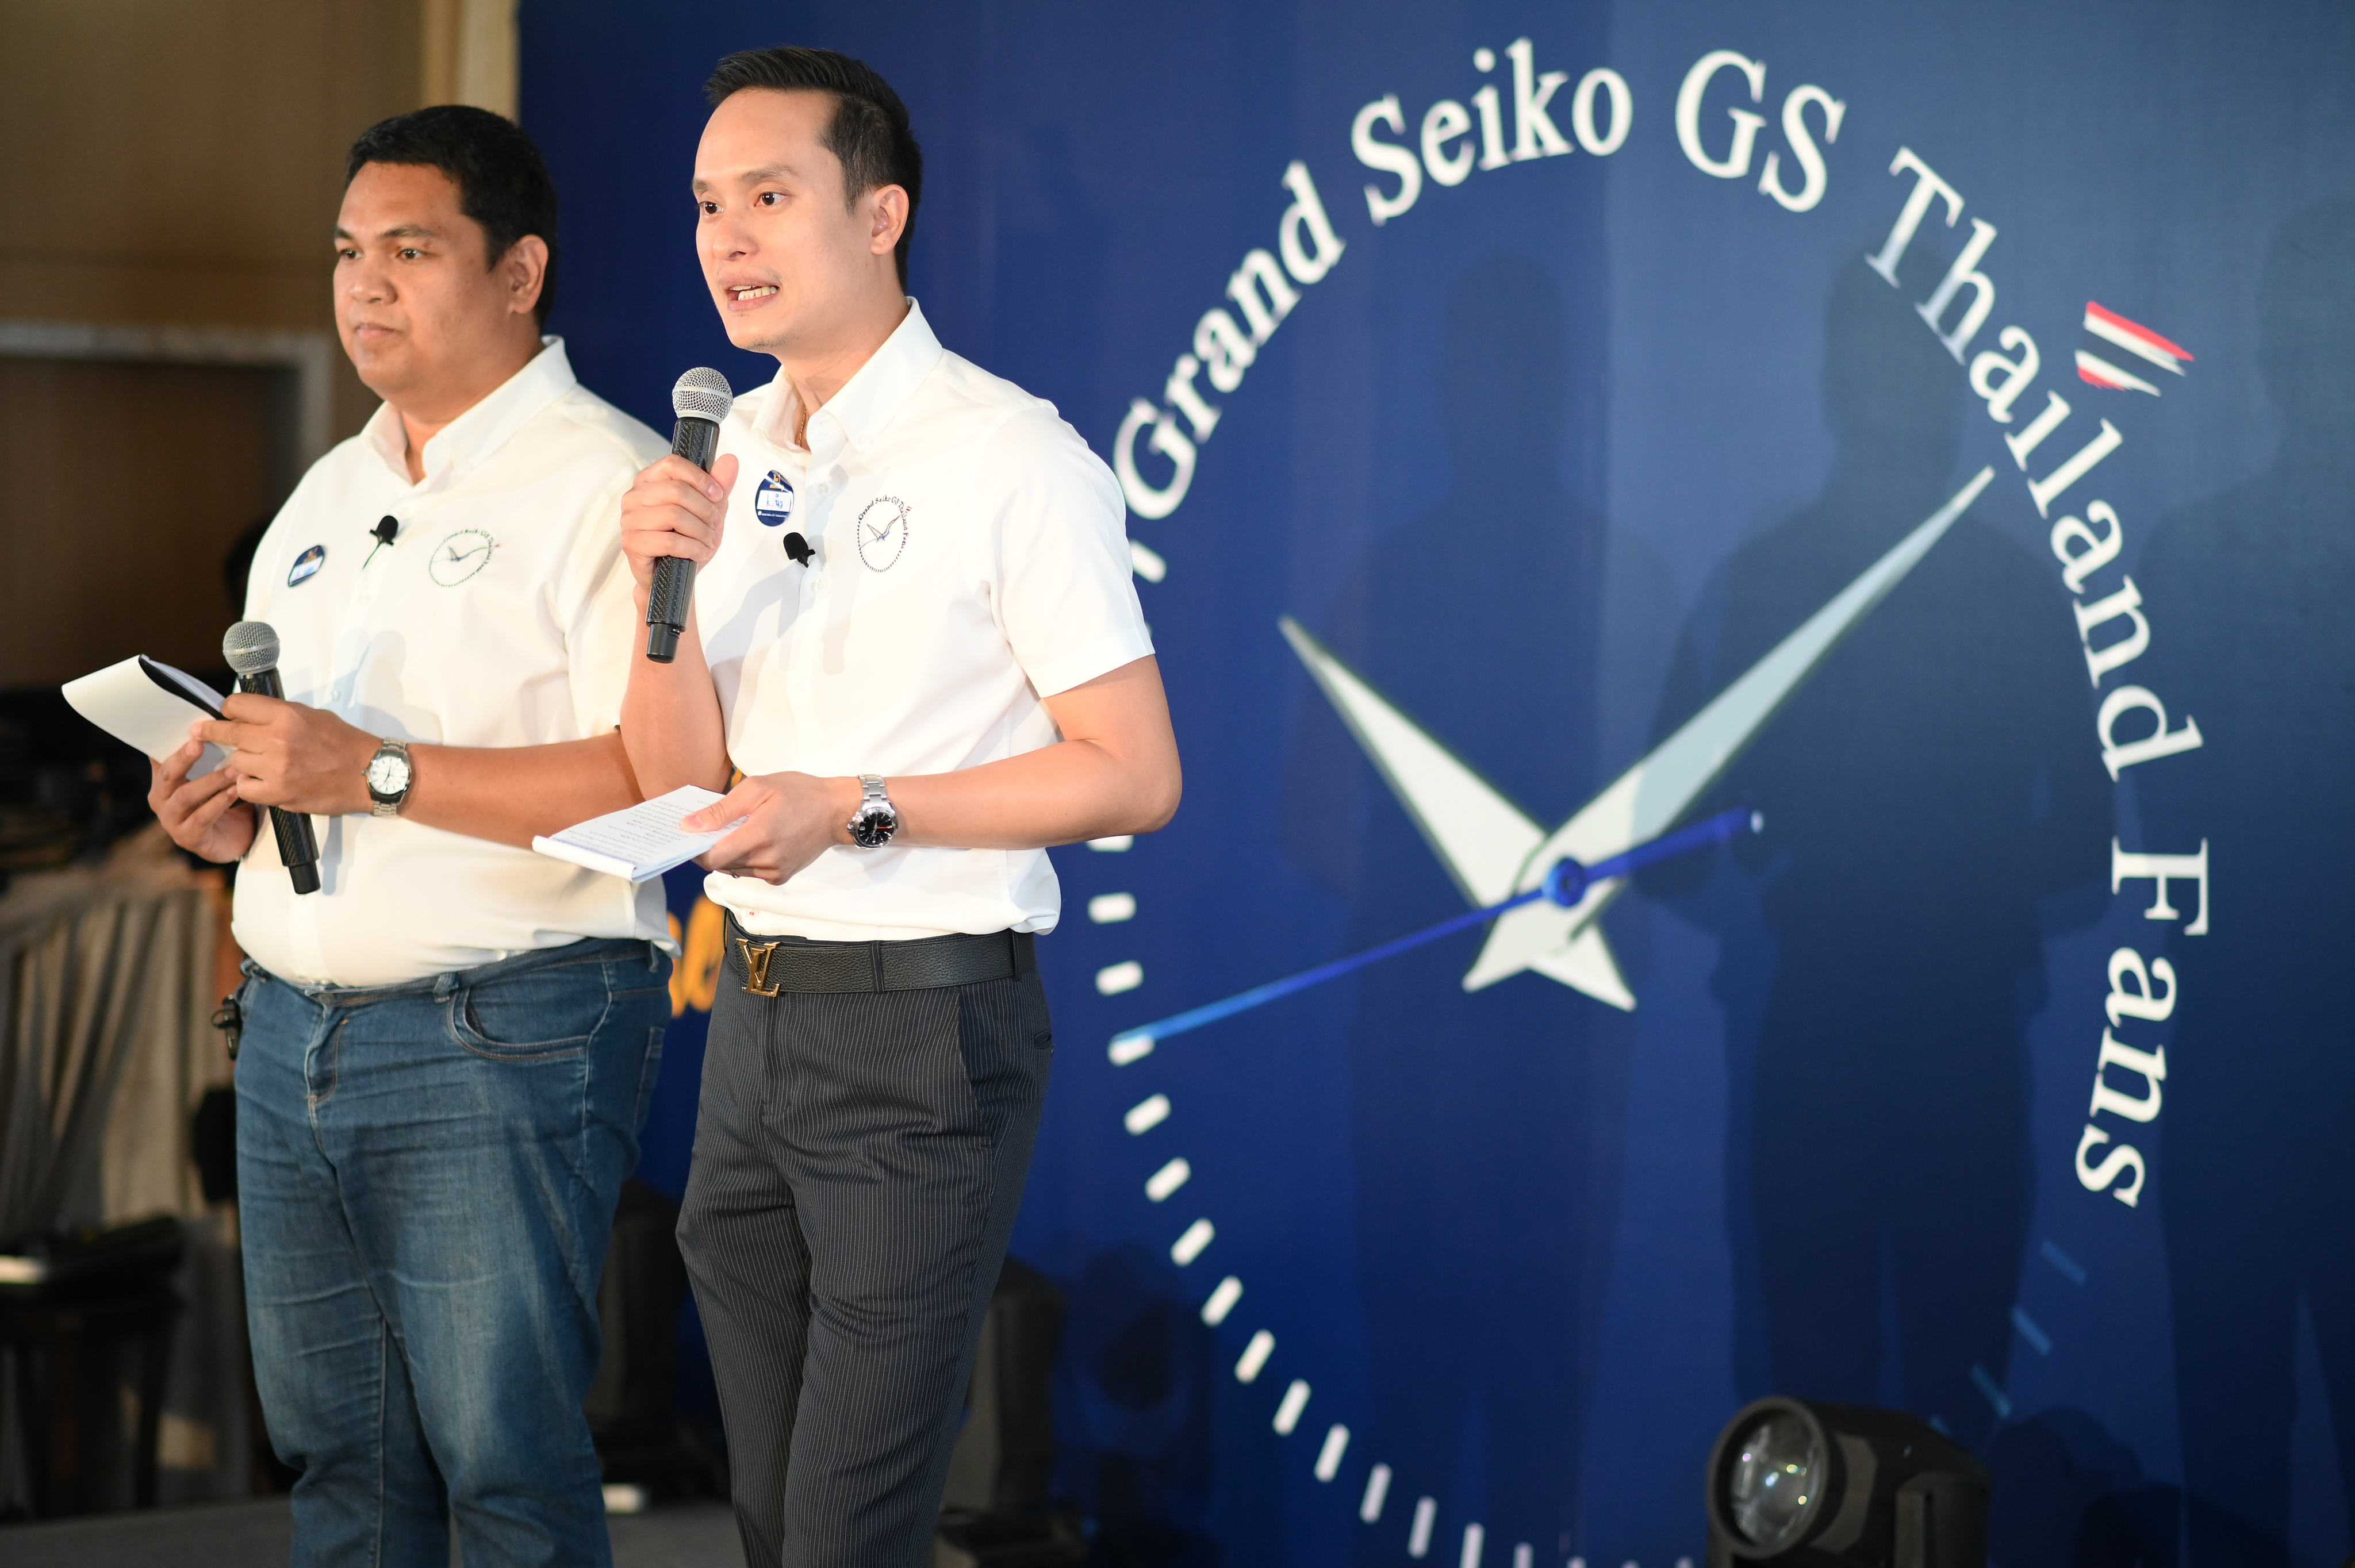 Grand Seiko GS Thailand Fans 1st Meeting Capella Bangkok 443